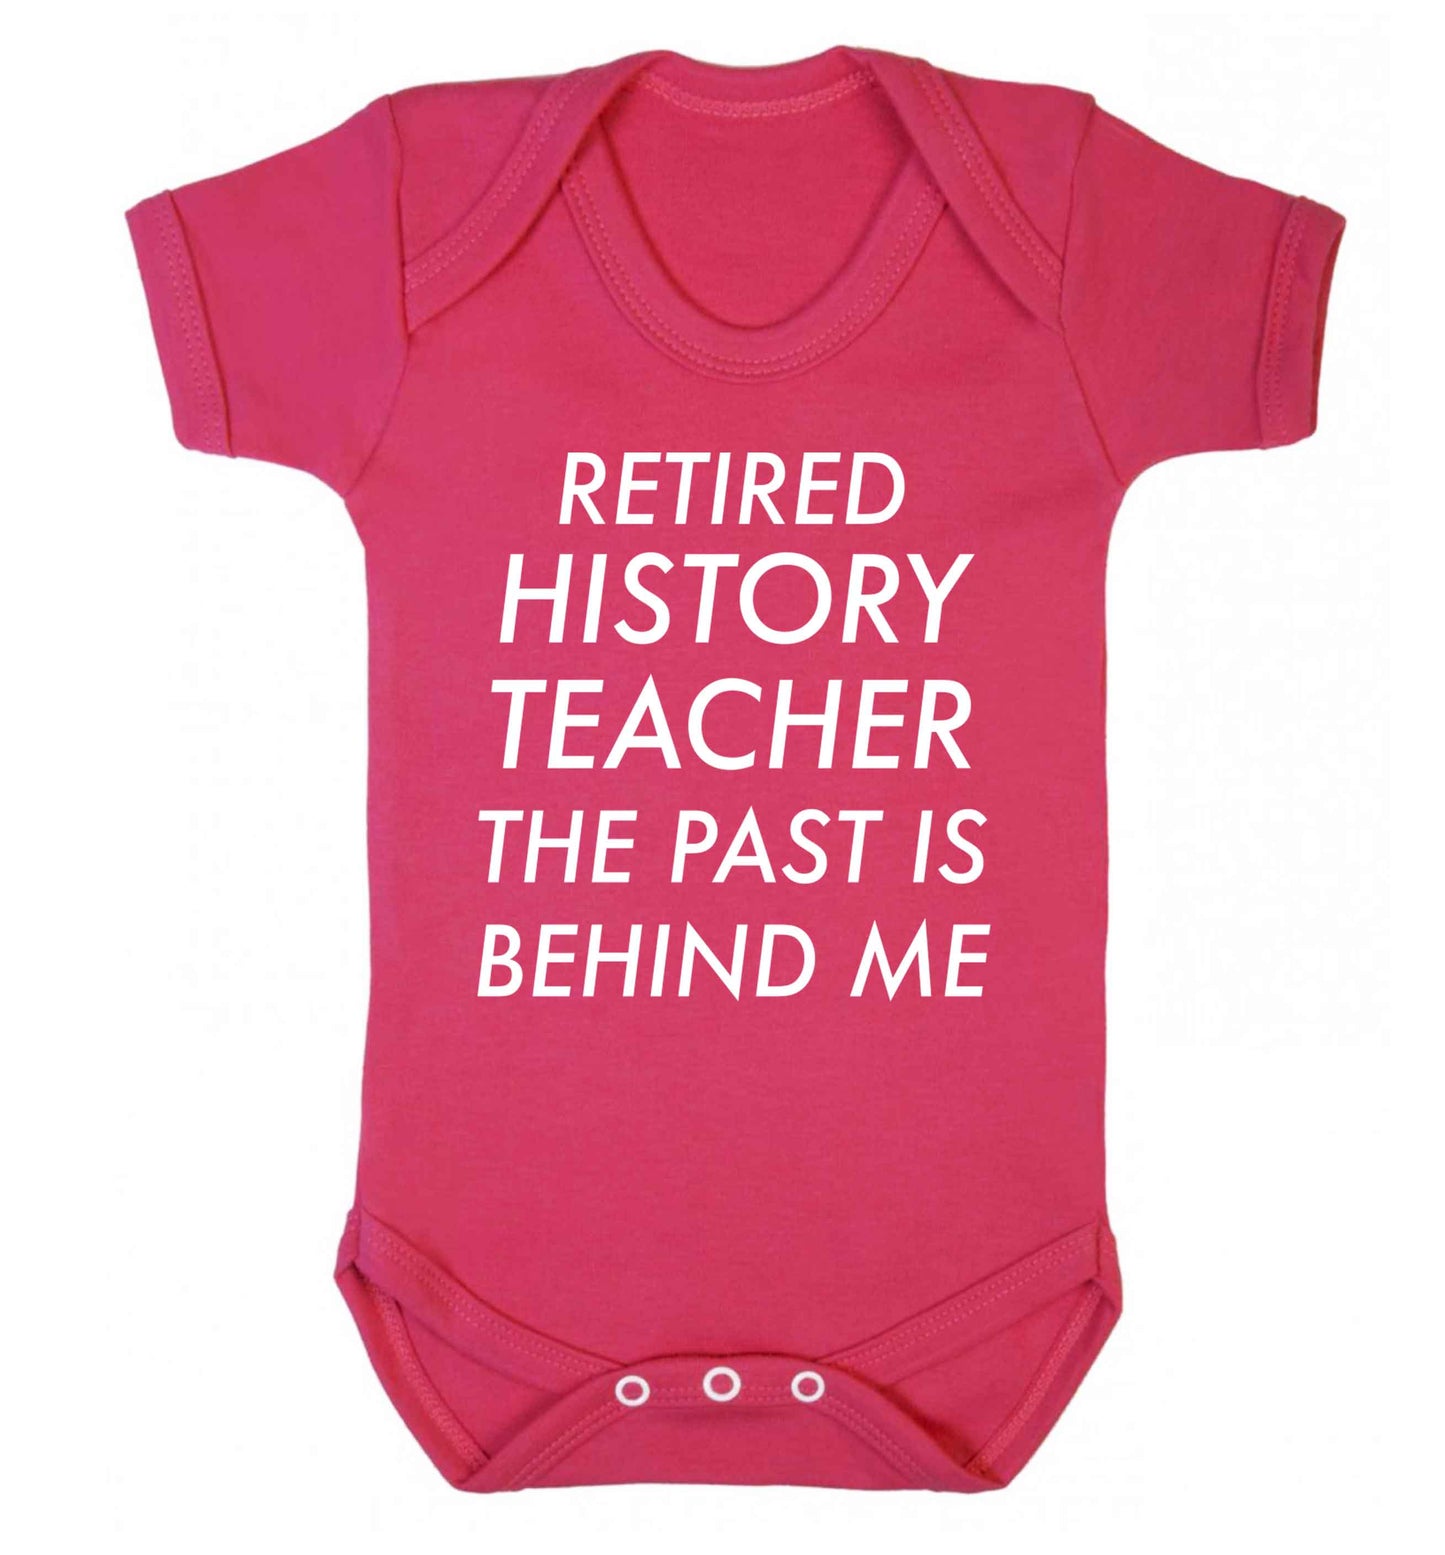 Retired history teacher the past is behind me Baby Vest dark pink 18-24 months